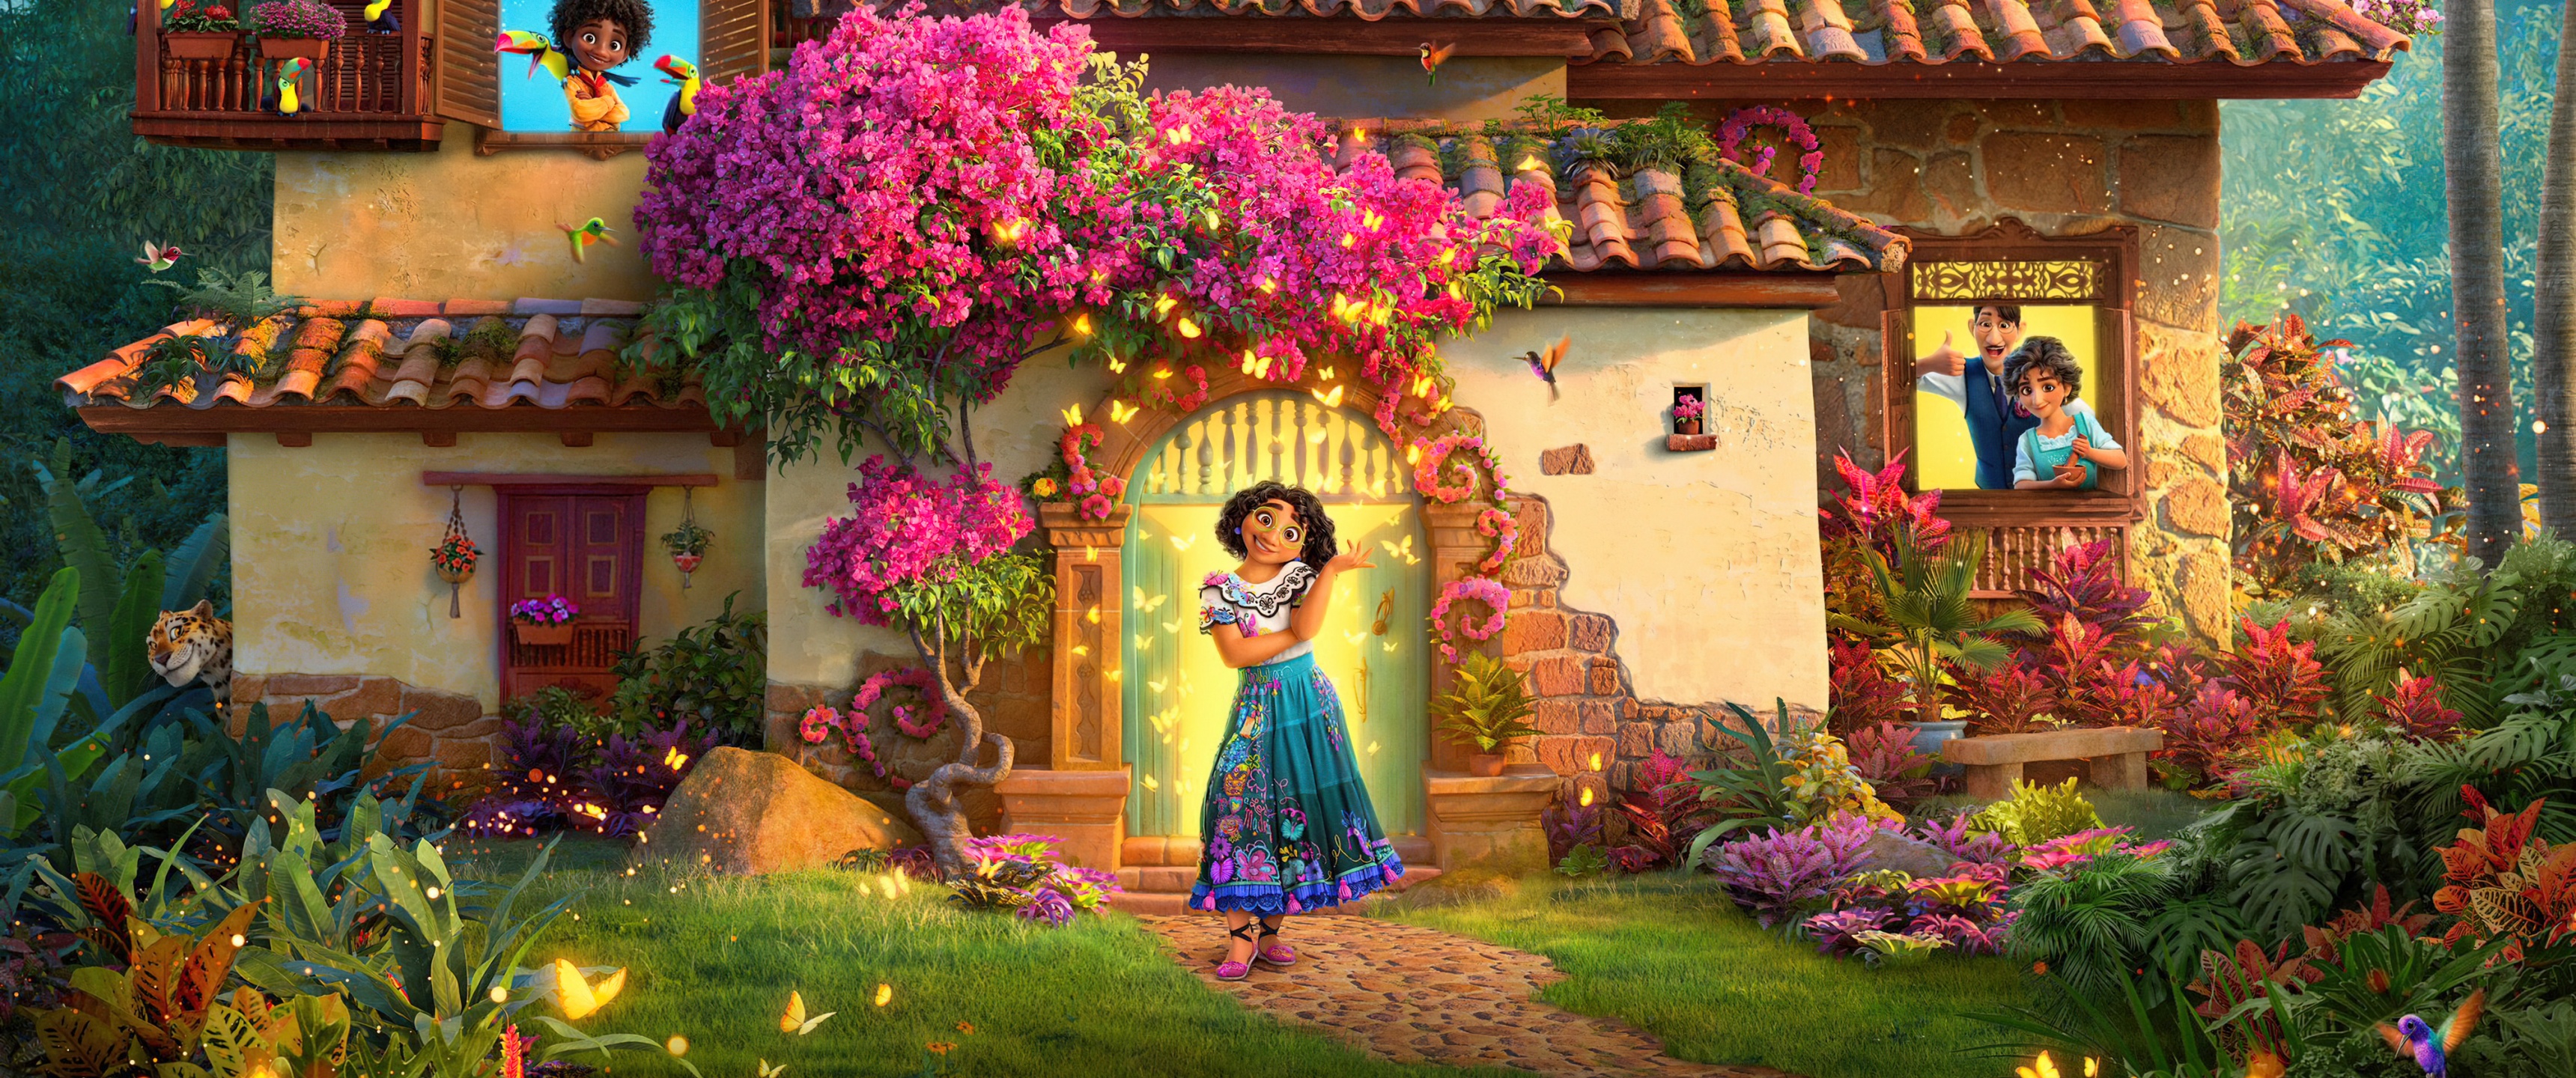 Encanto Wallpaper 4K, 2021 Movies, Disney, Animation, Mirabel Madrigal, Movies